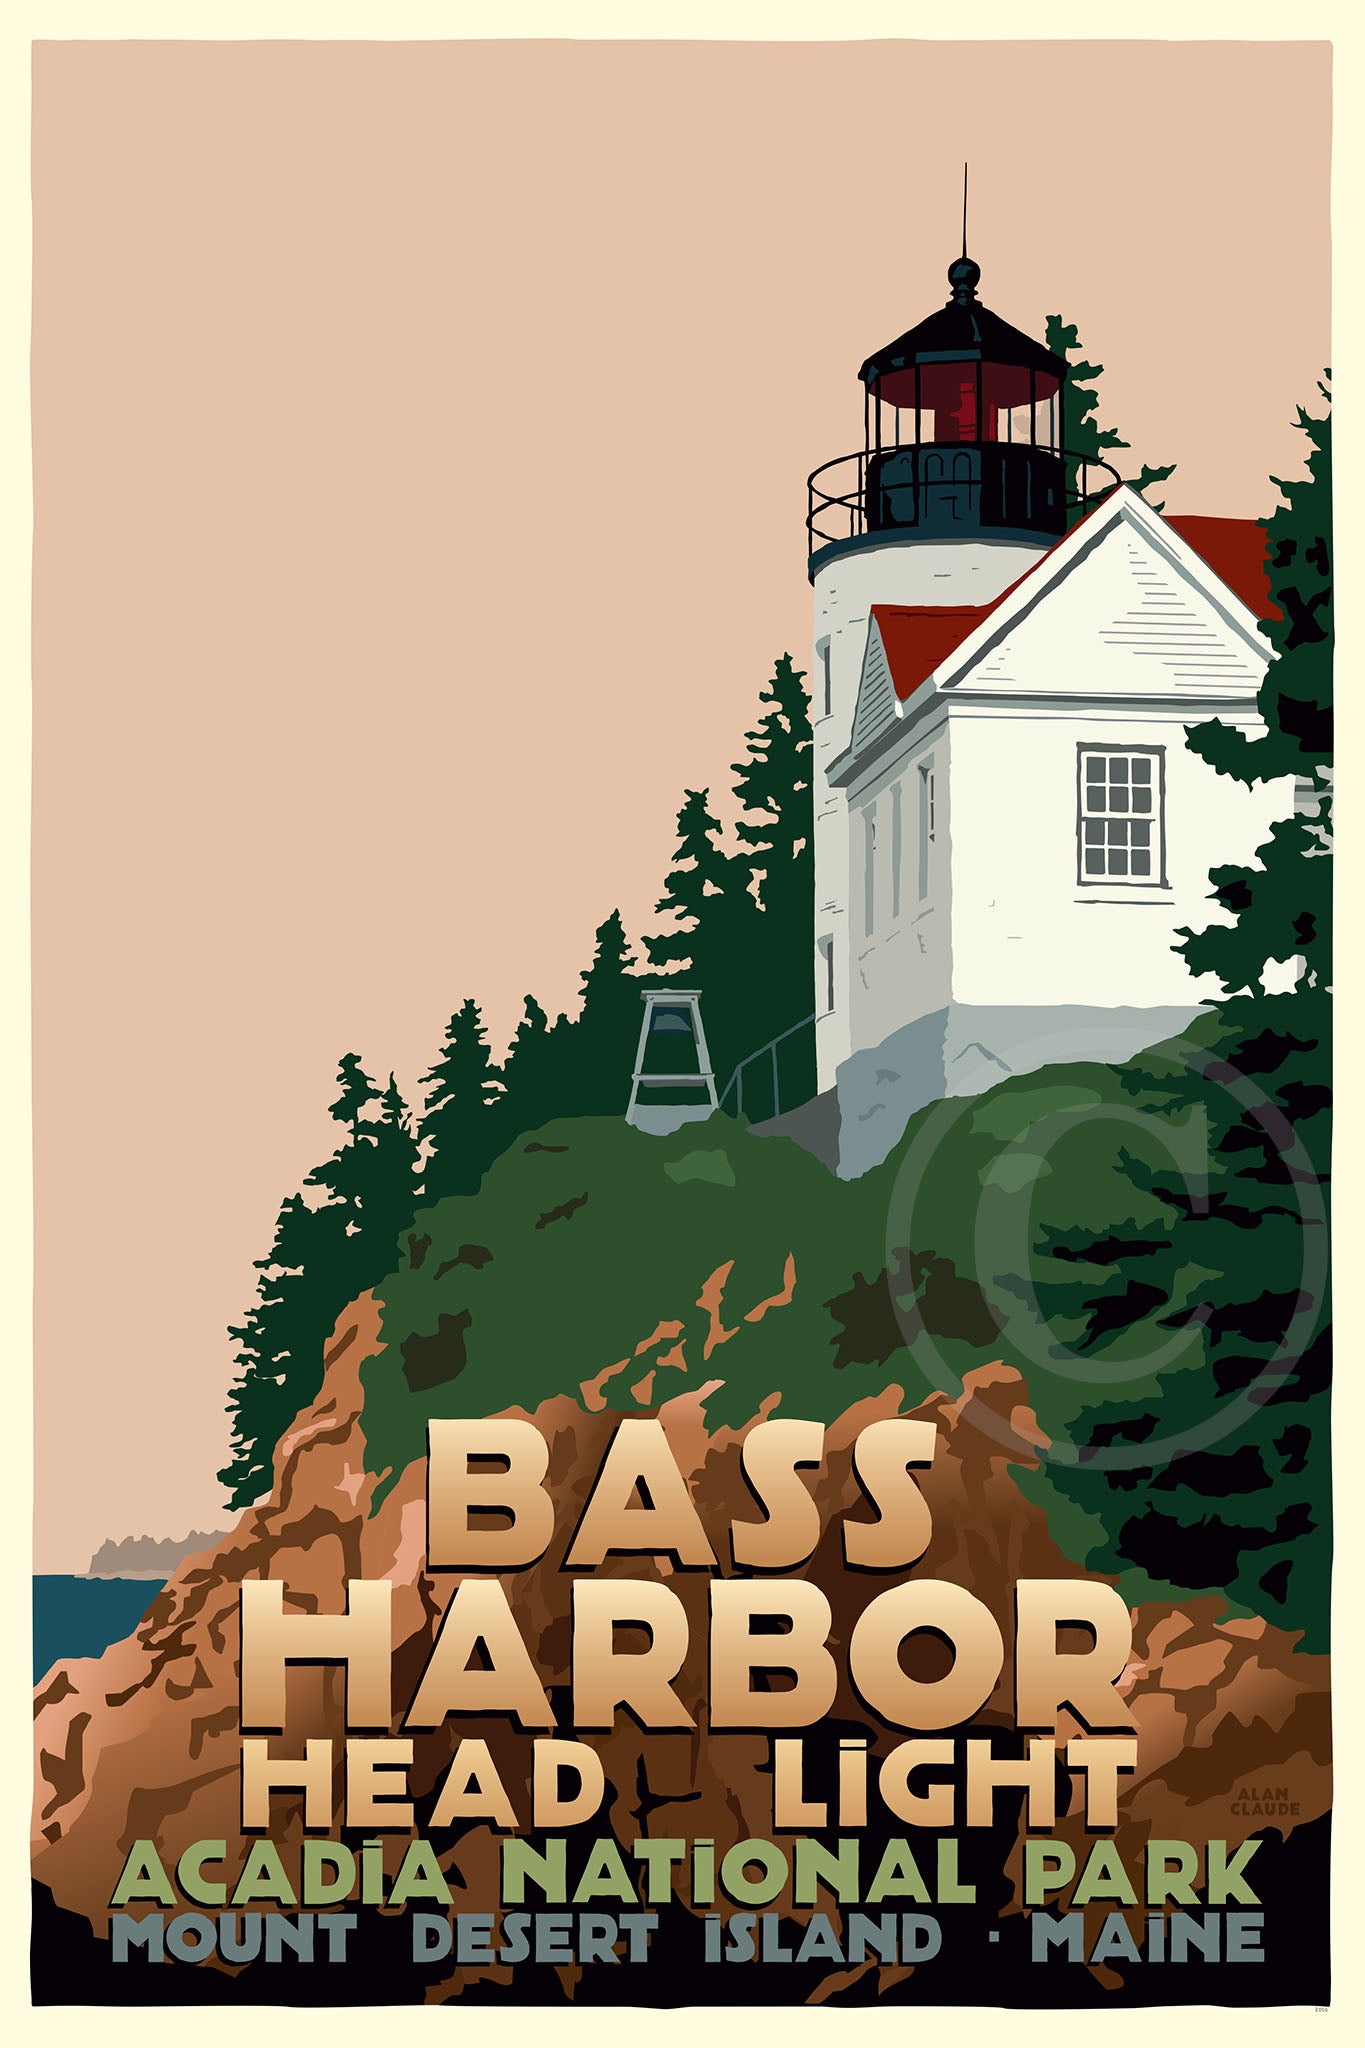 Bass Harbor Head Light Art Print 24" x 36" Travel Poster By Alan Claude - Maine